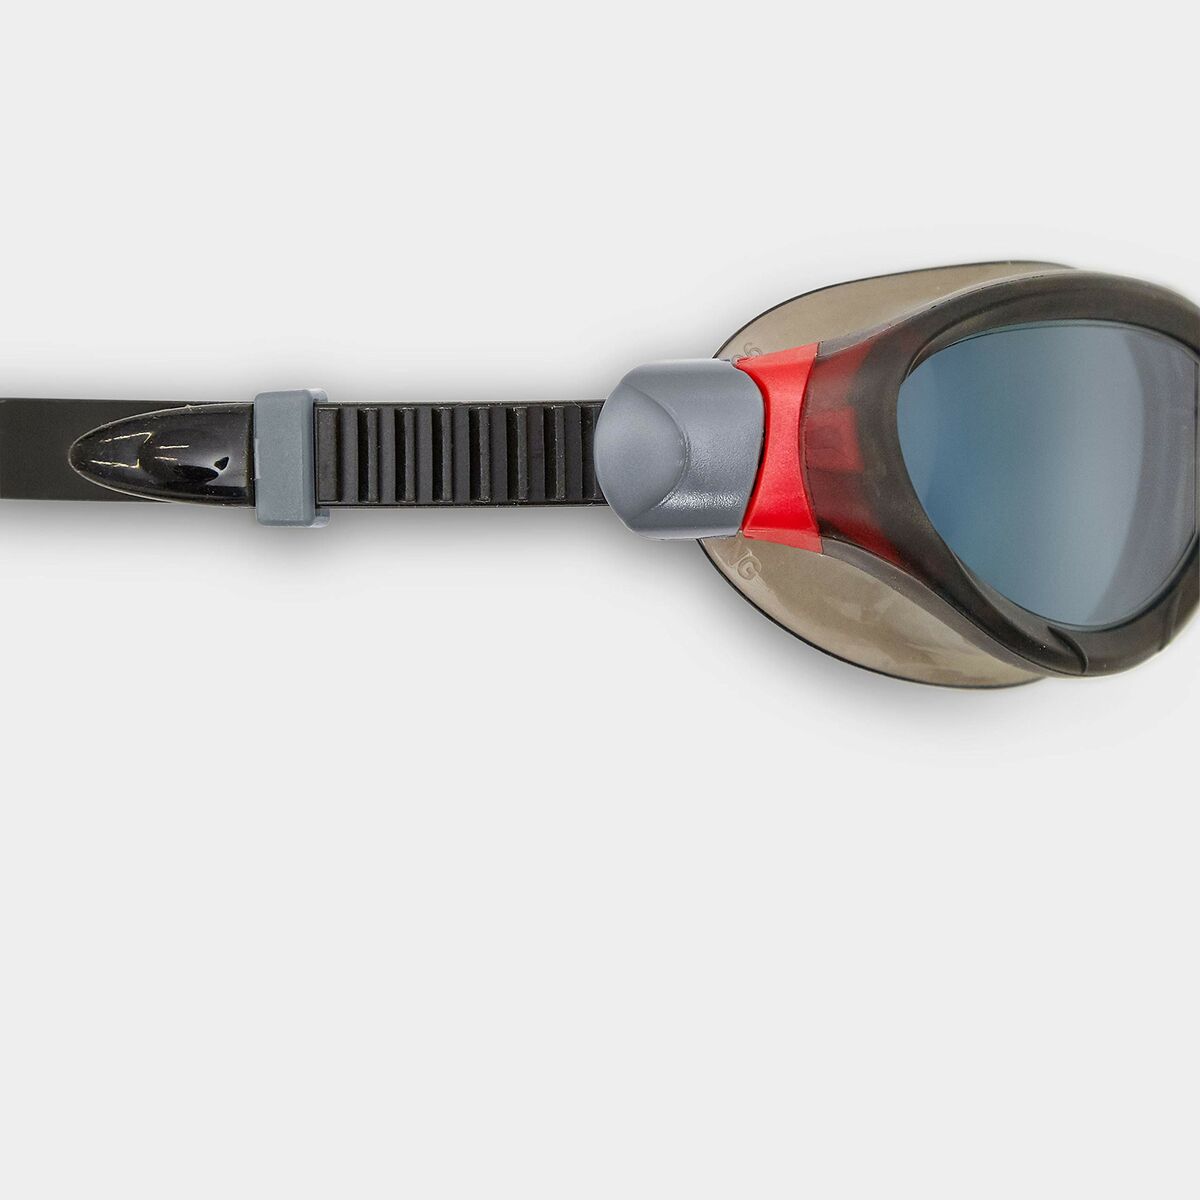 Swimming Goggles Zoggs Phantom 2.0 Black One size